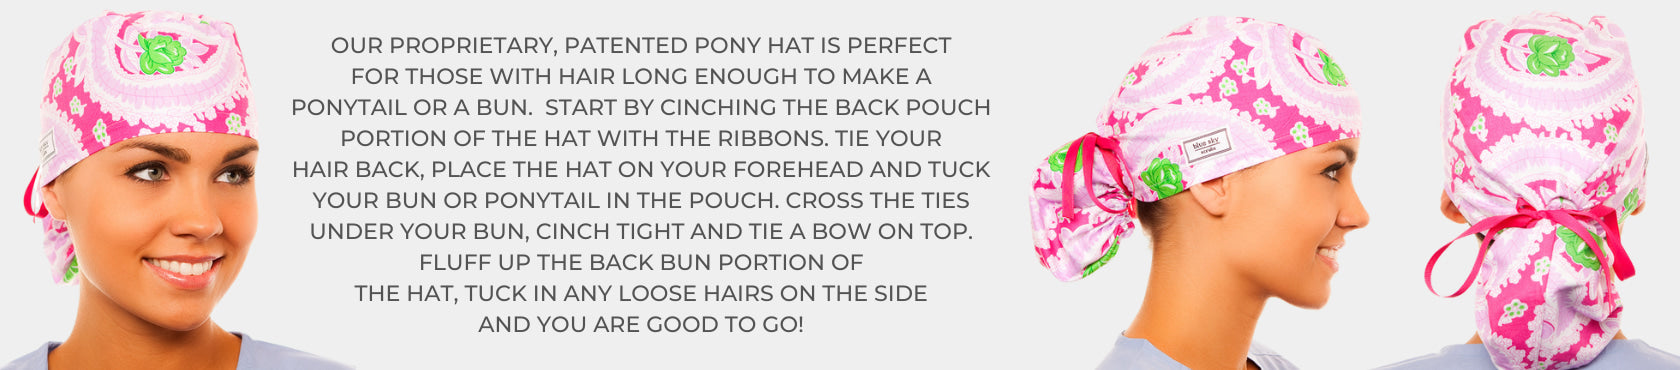 Pony Scrub Hats